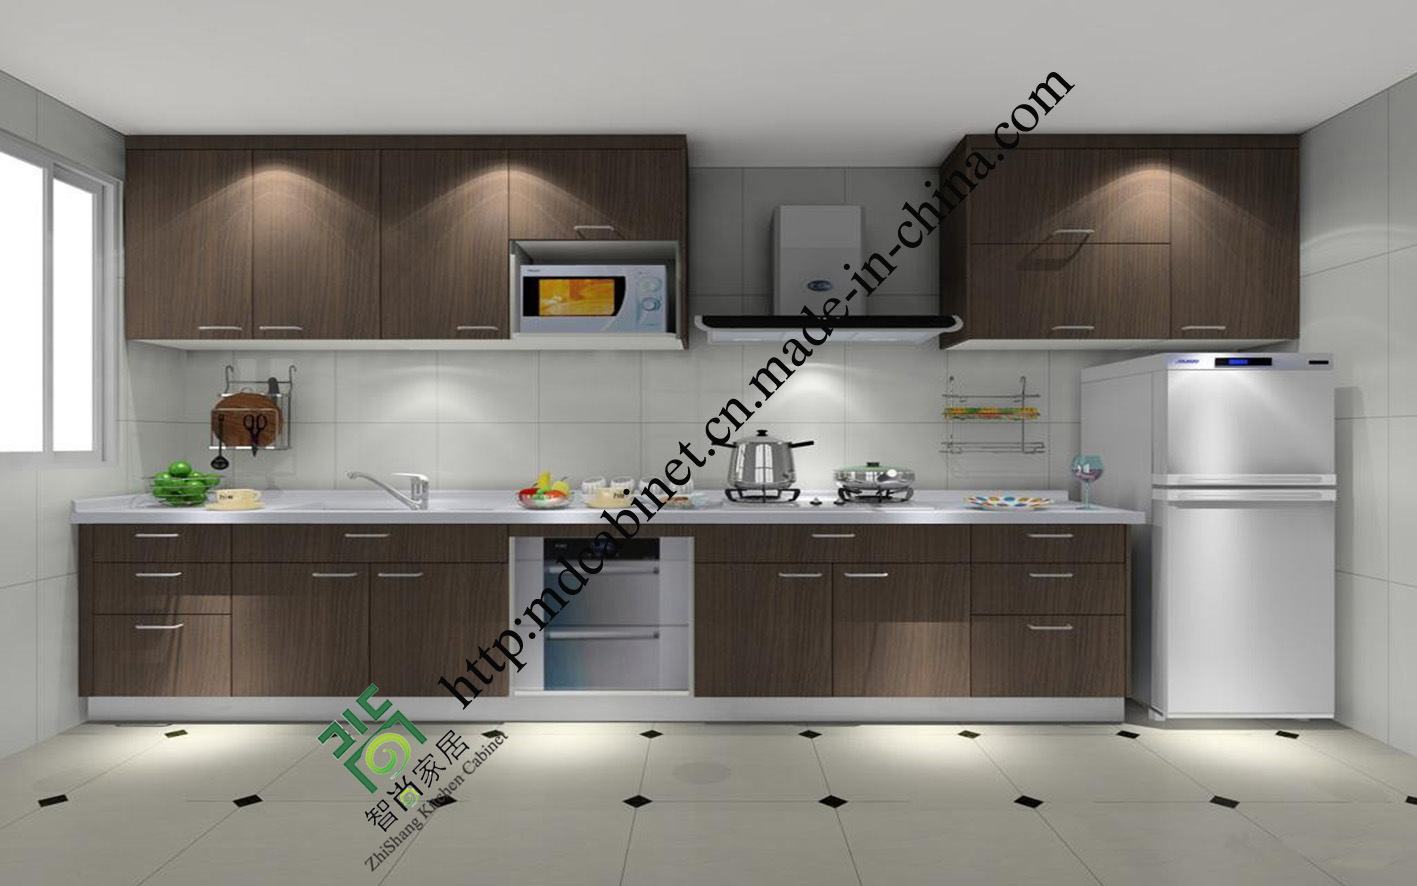 Customized Design UV Kitchen Cabinet Manufacturer (zs-425)